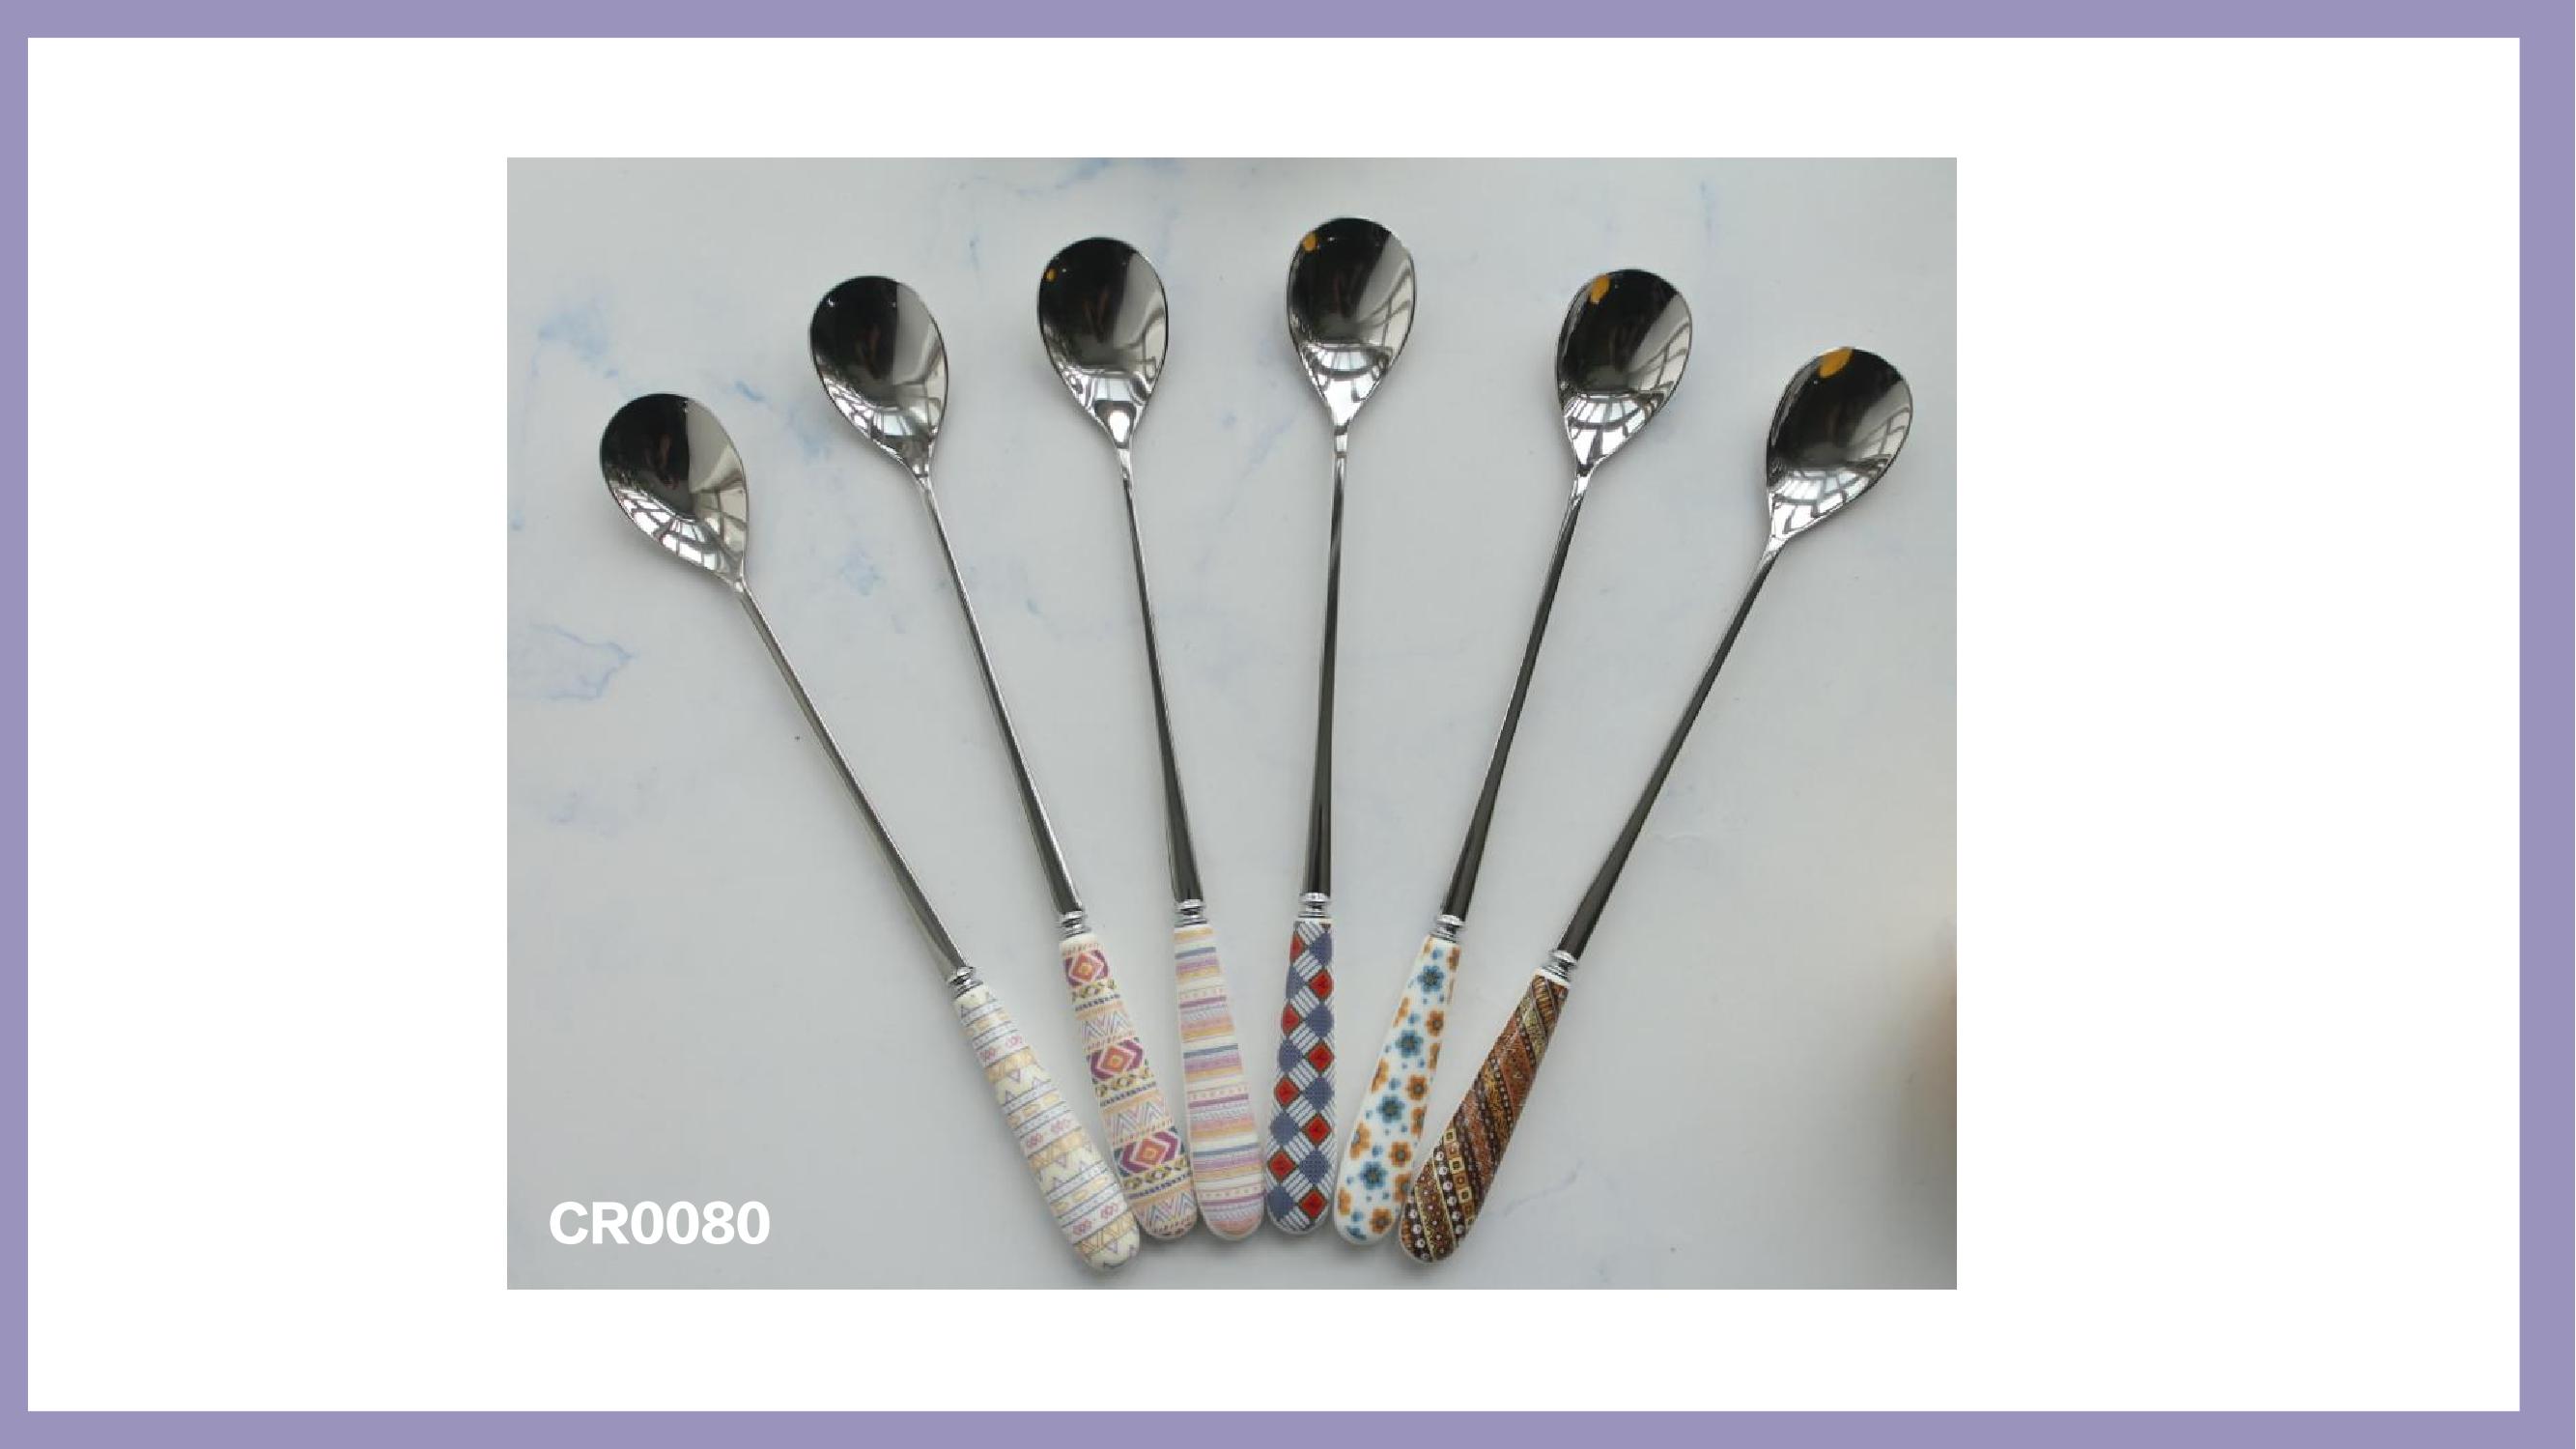 catalogue of ceramic handle cutlery_17.jpg